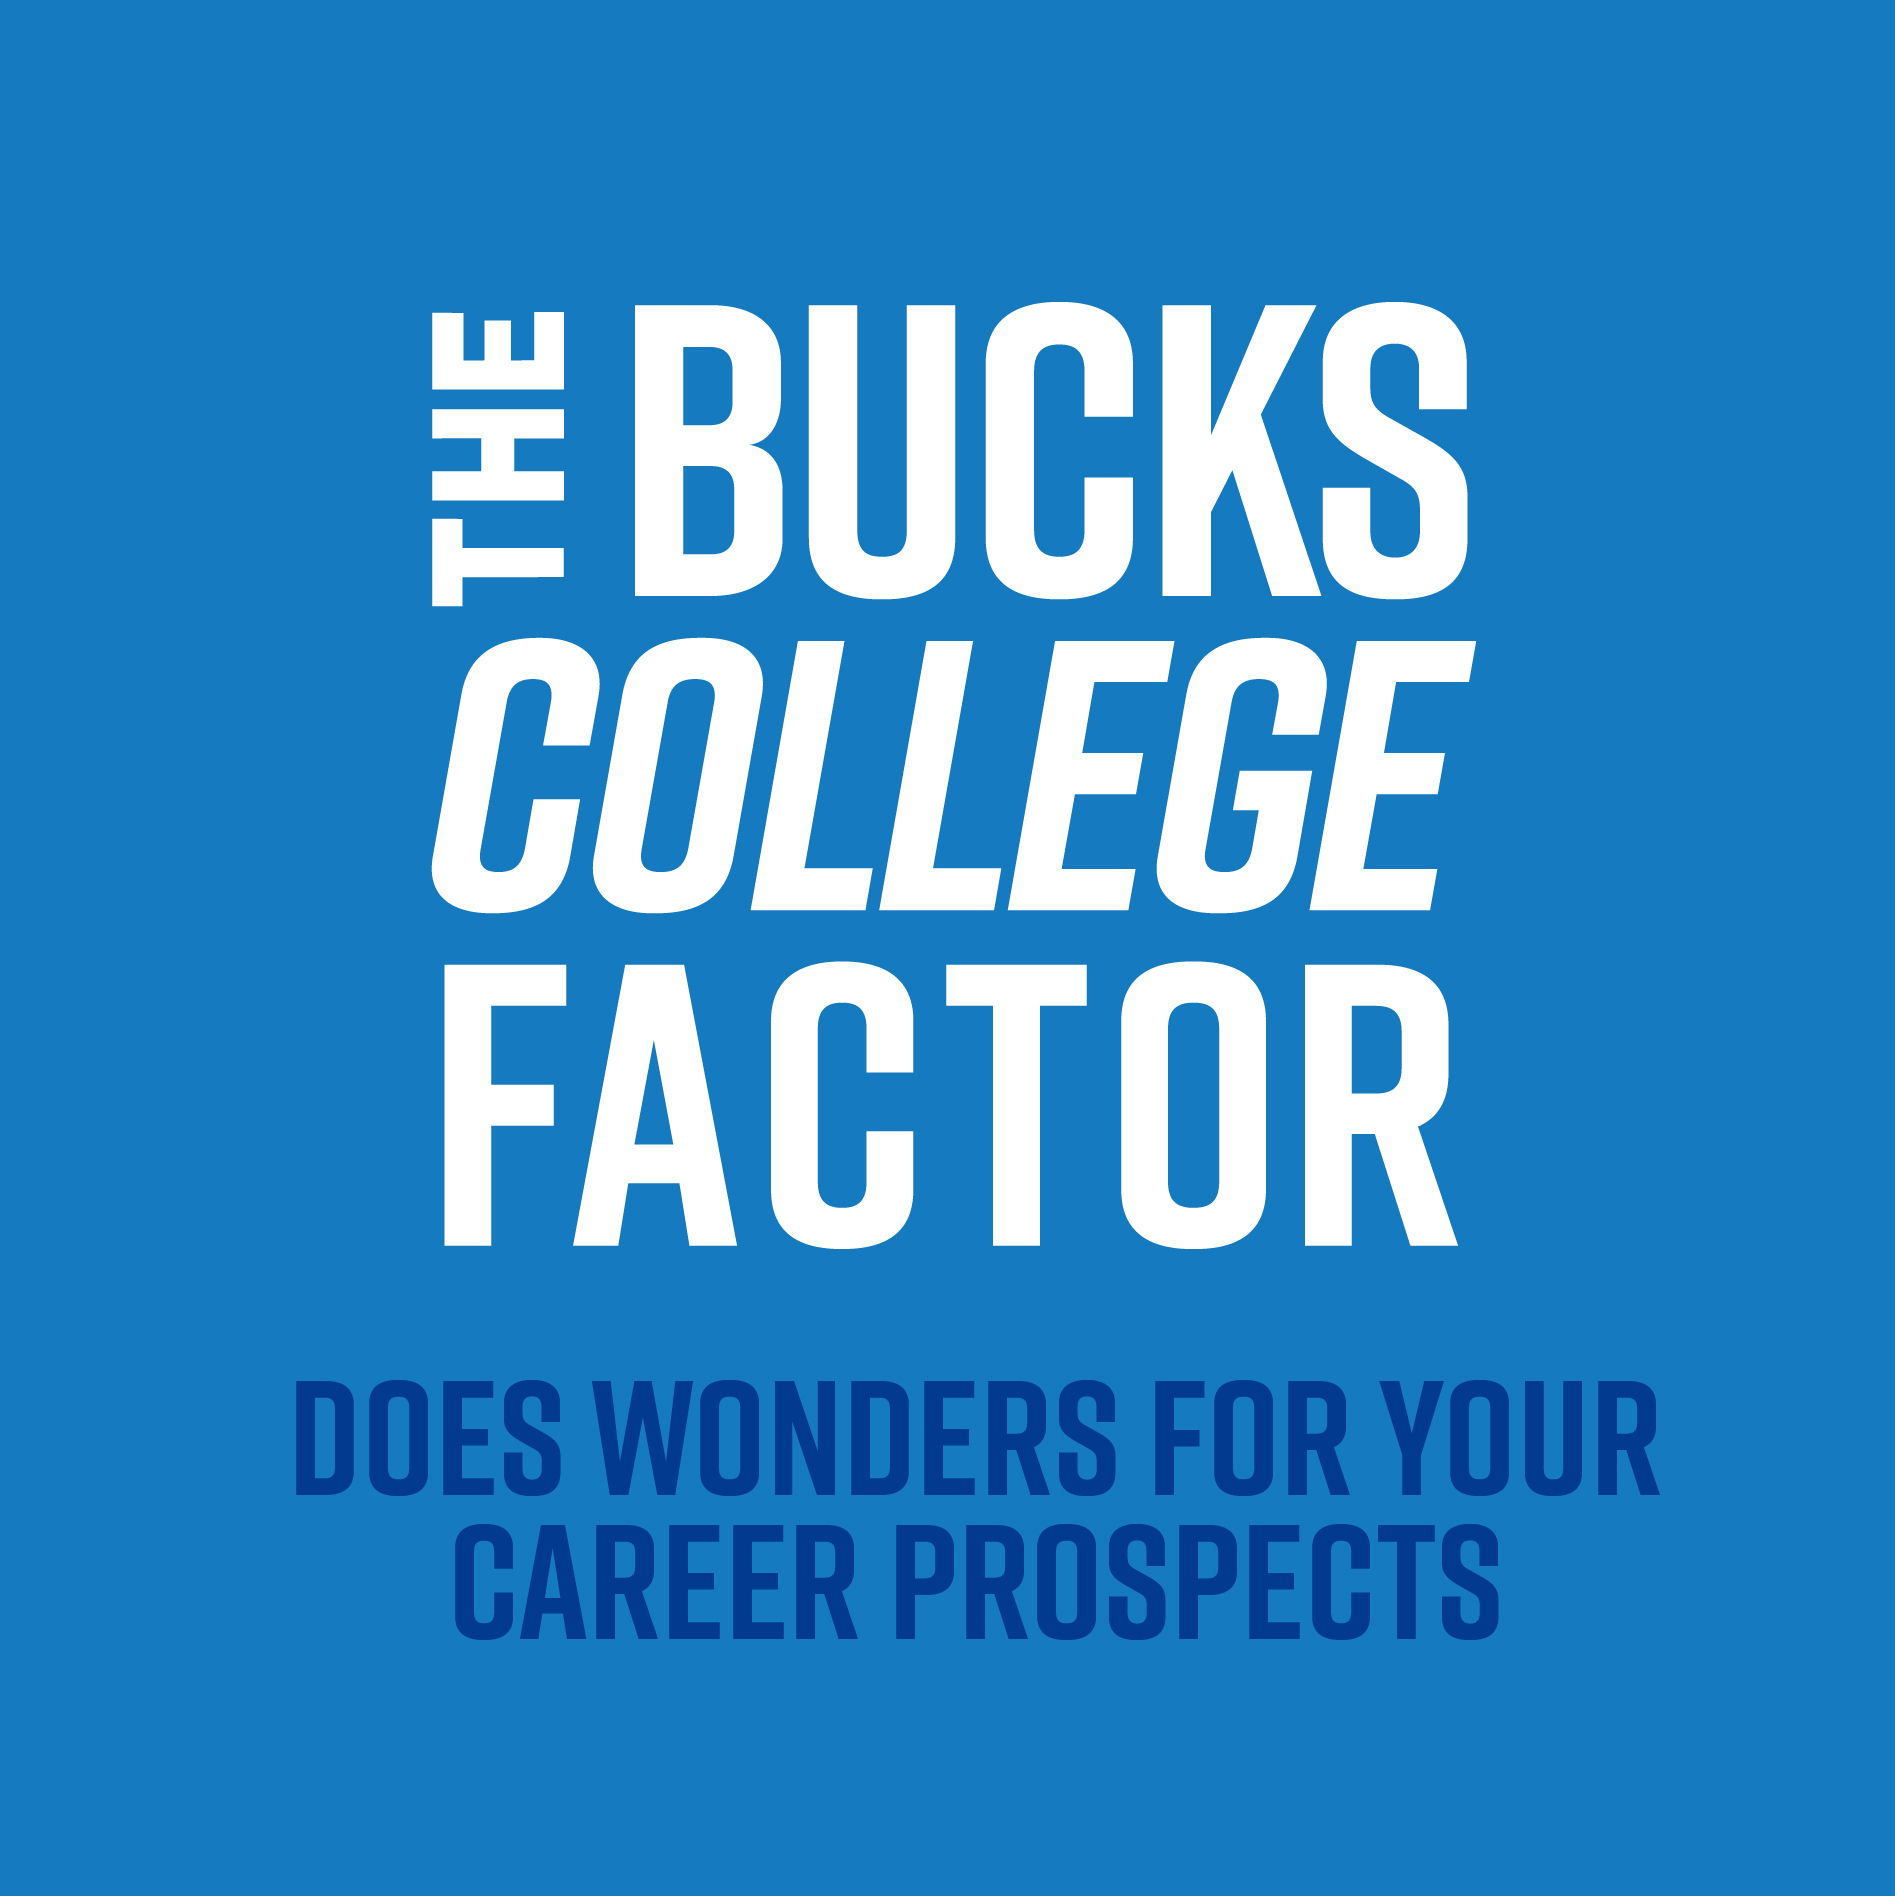 The Bucks College Factor